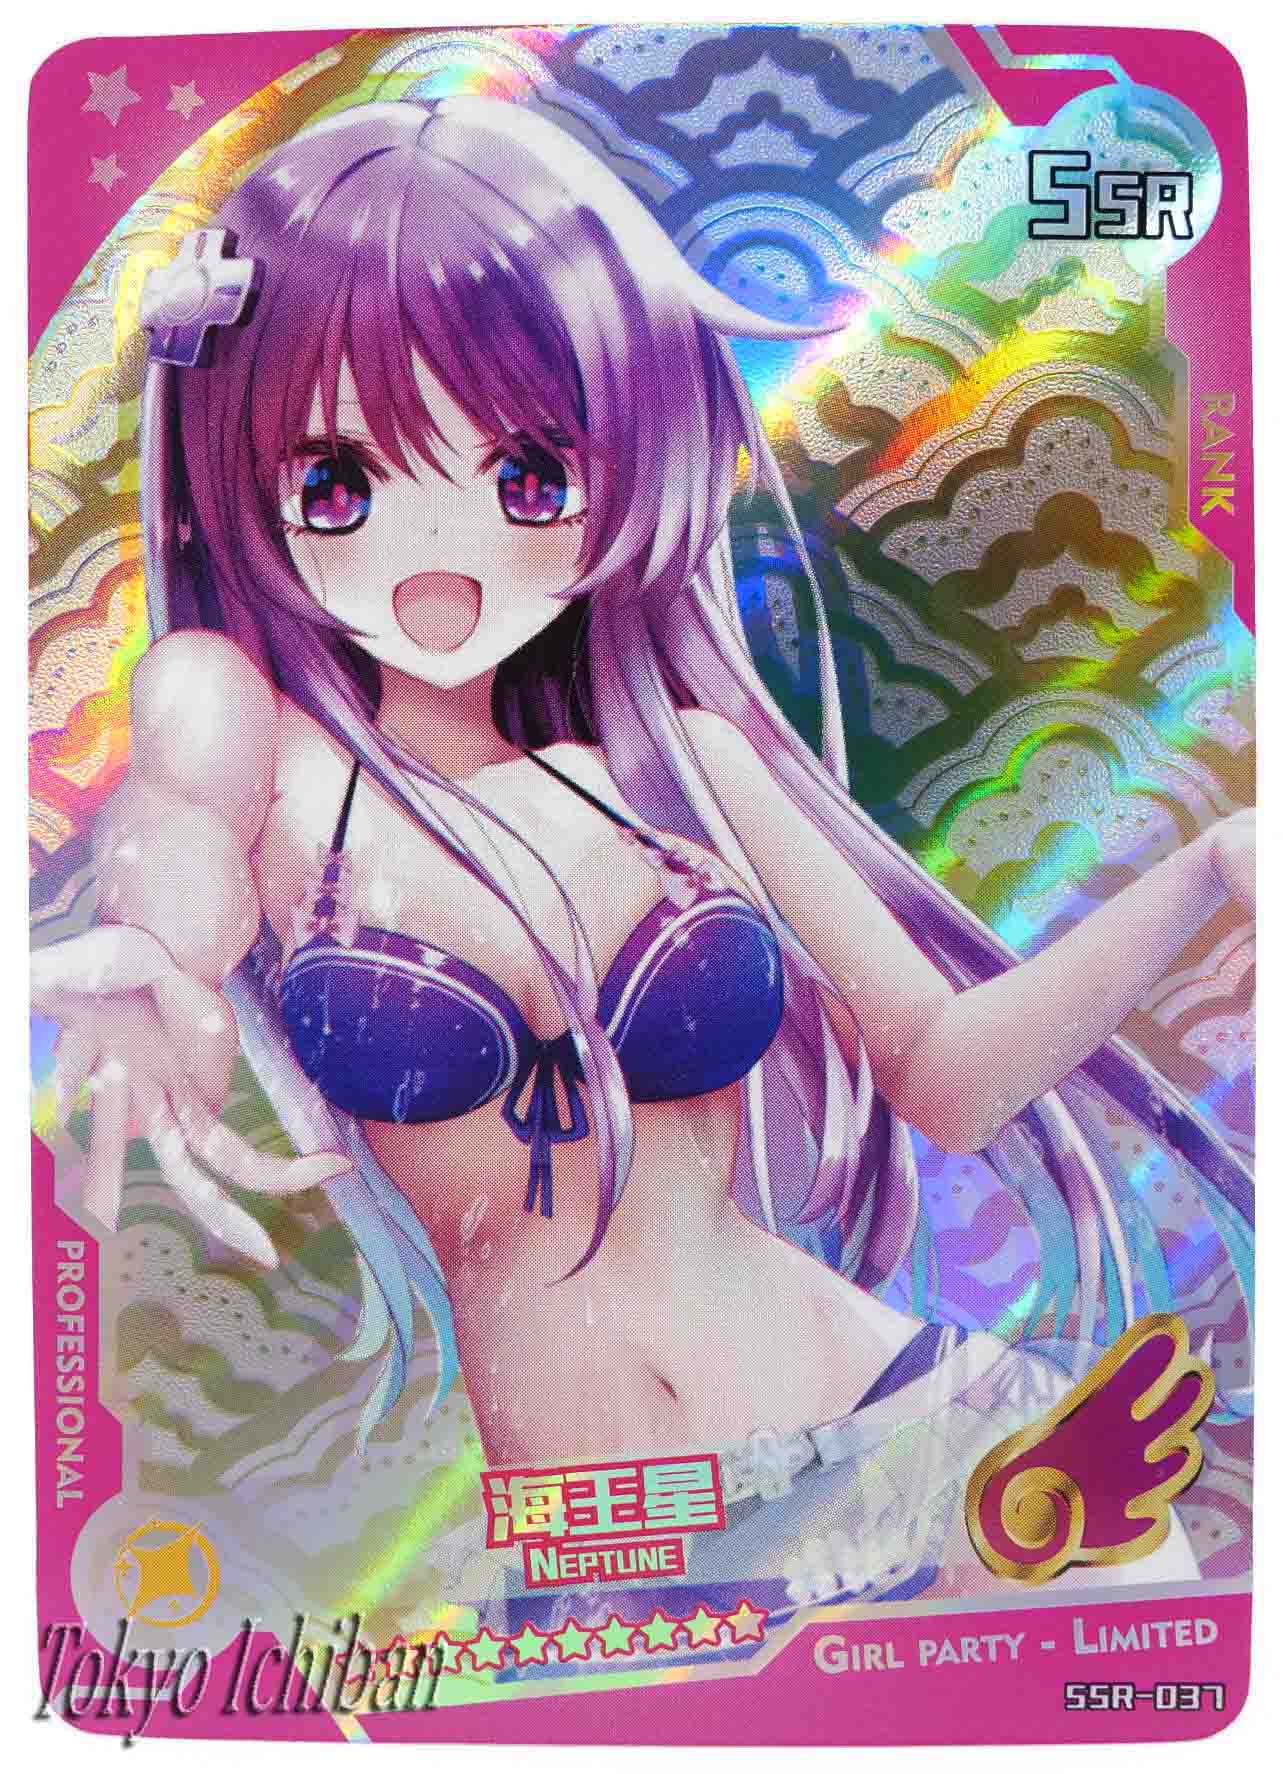 Sexy Card Hyperdimension Neptunia Neptune Girl Party Limited SSR-037